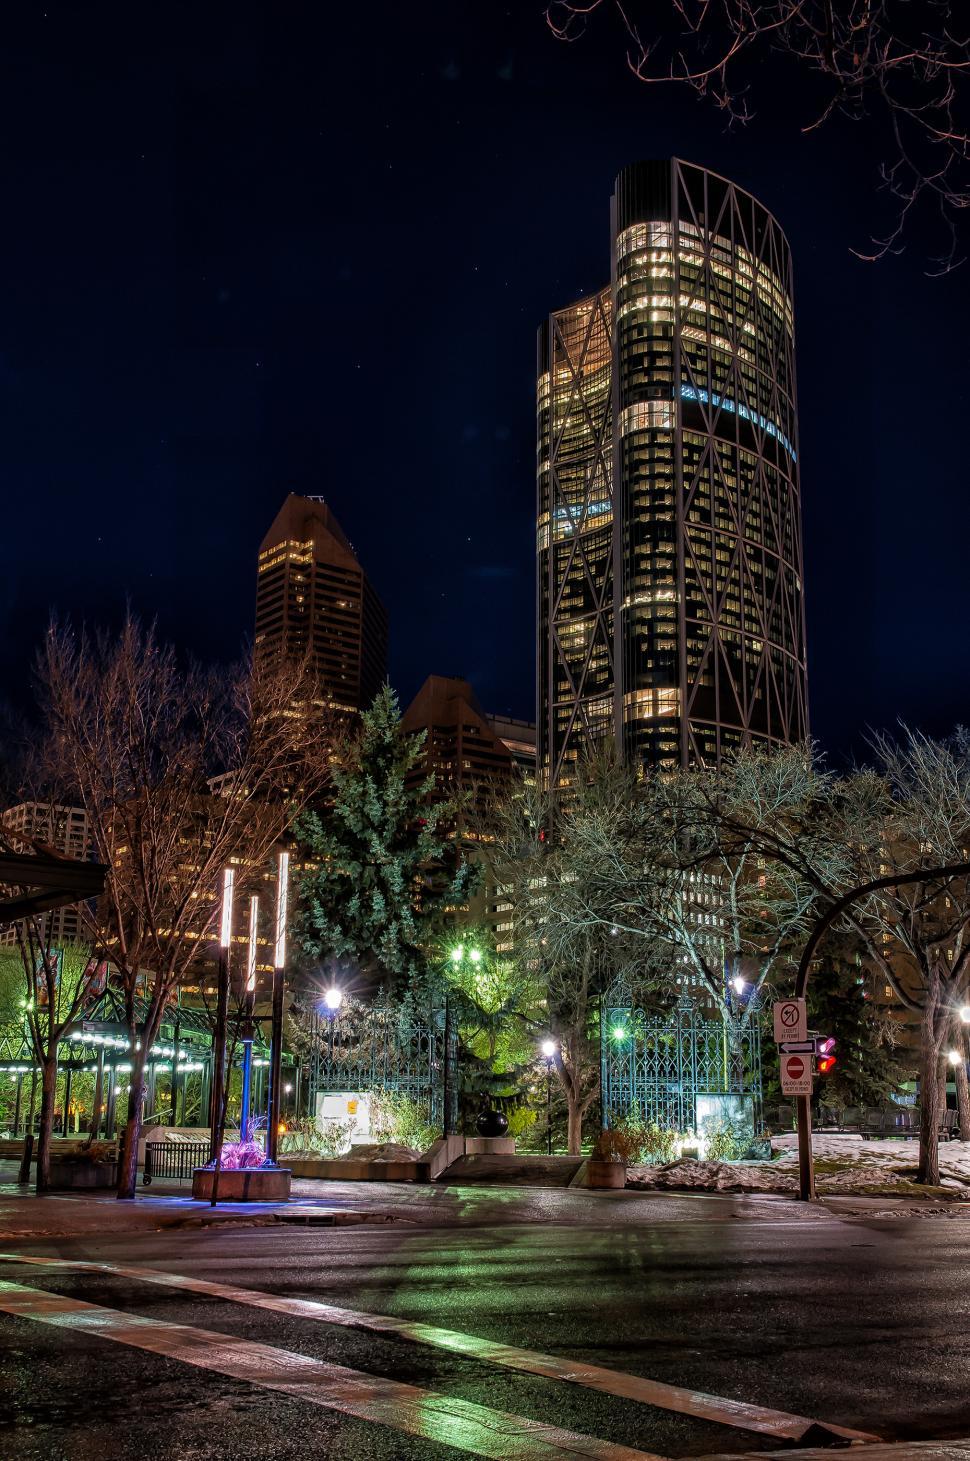 Free Image of Calgary Skyscraper at Night 